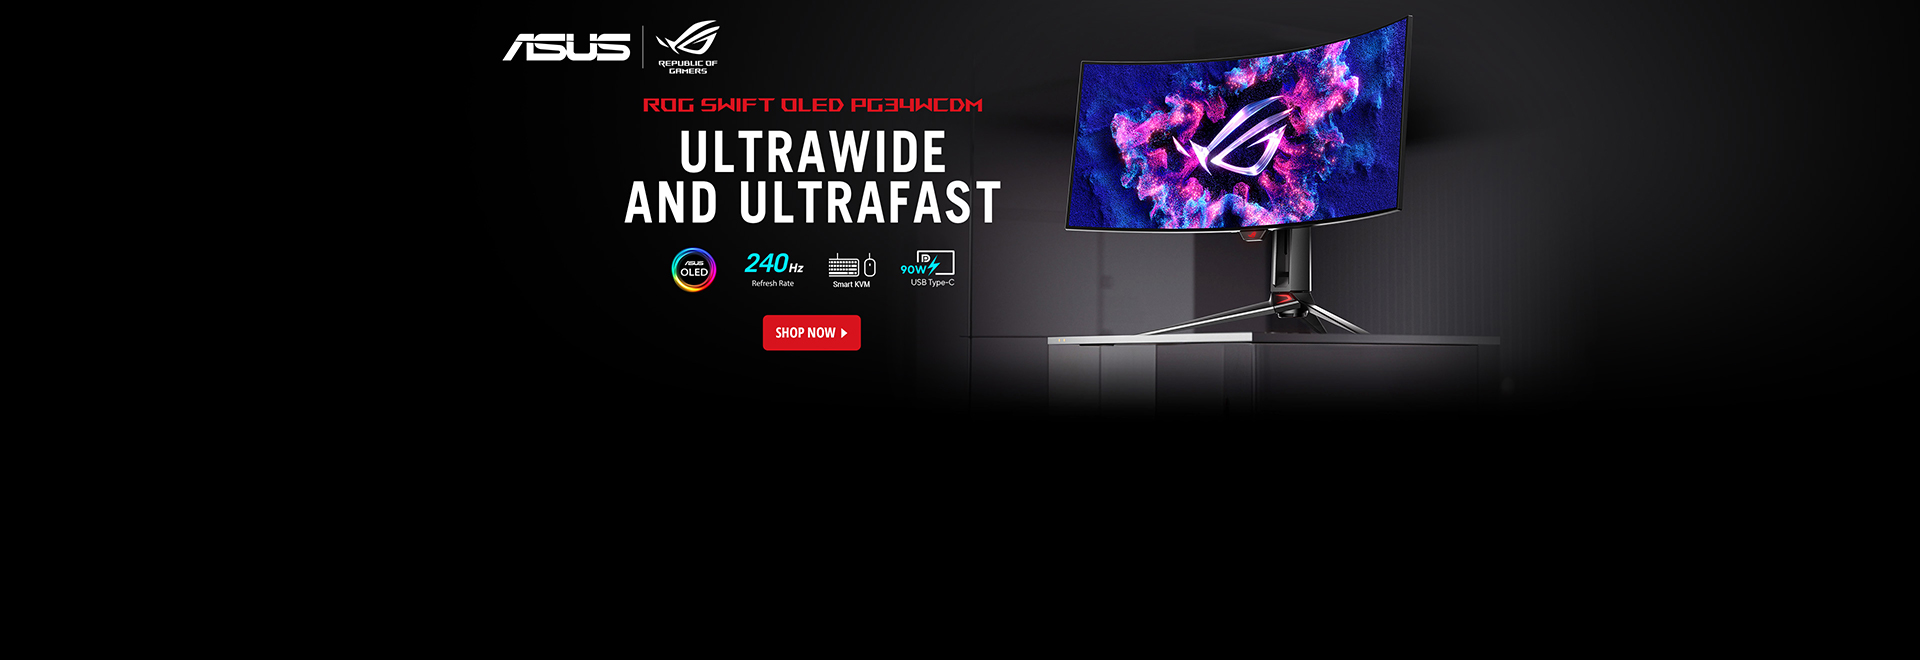  Ultrawide and Ultrafast